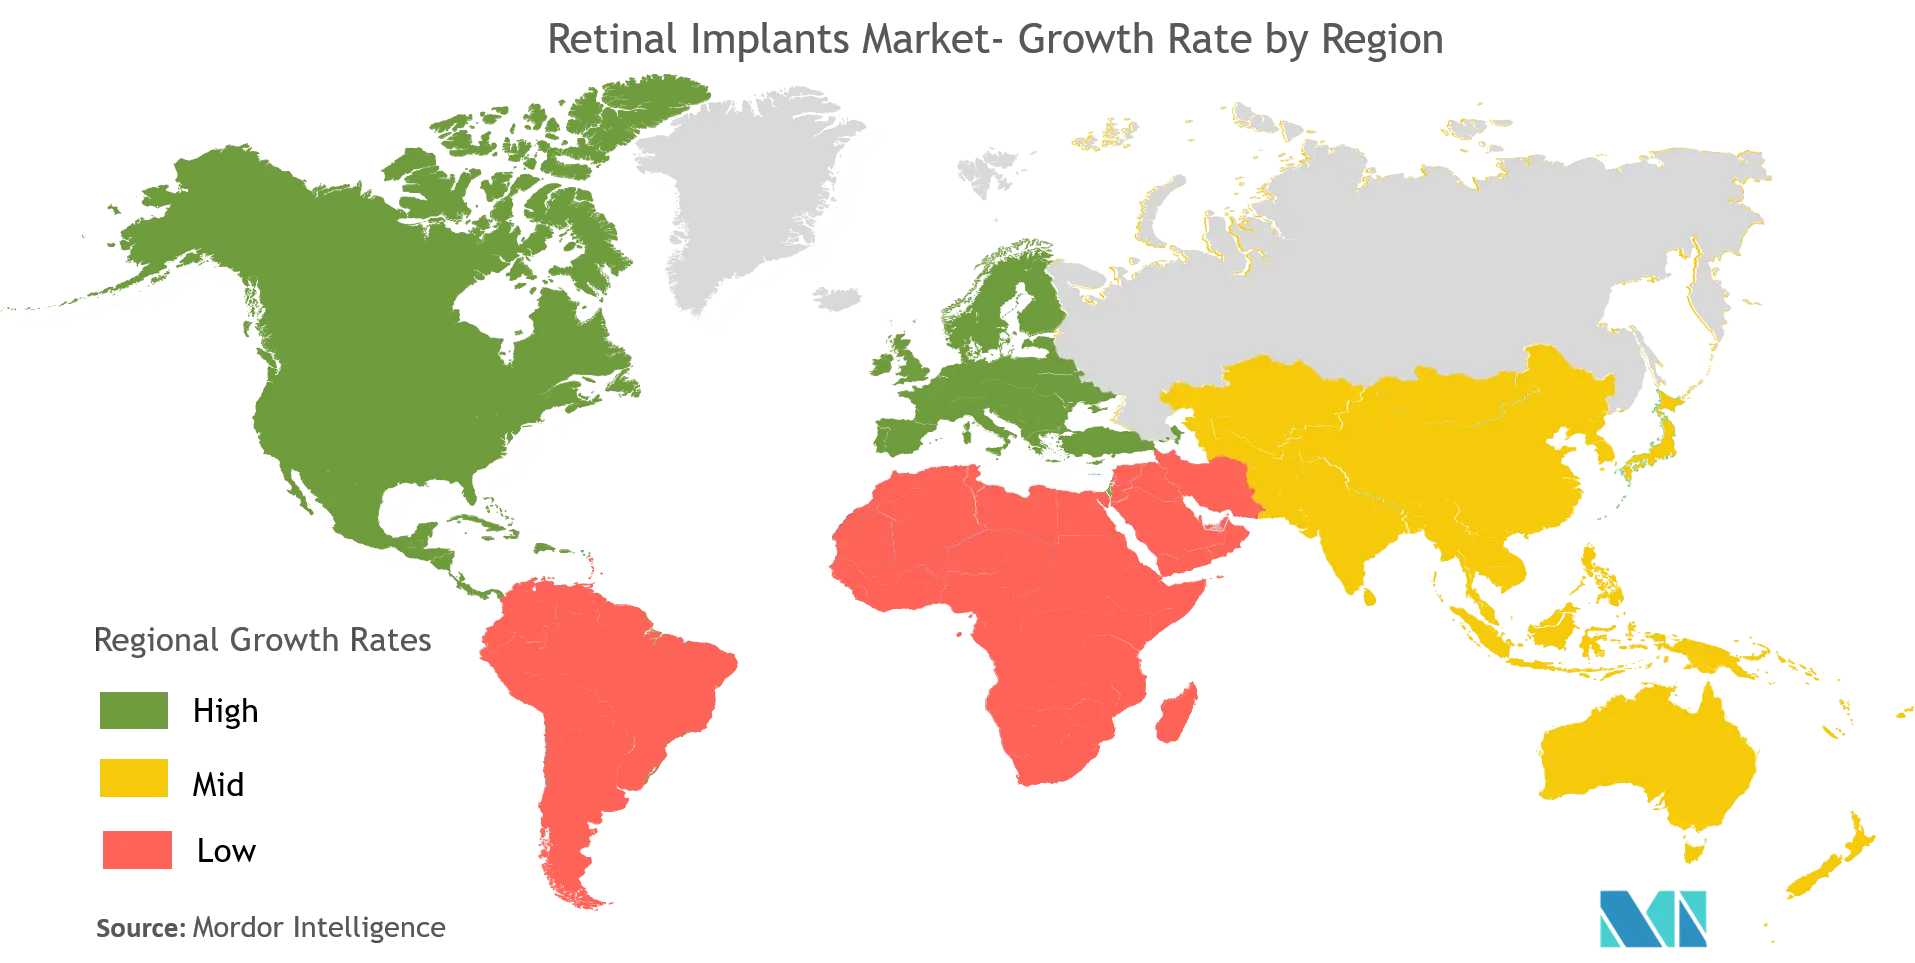 Retinal implants market Growth by Region